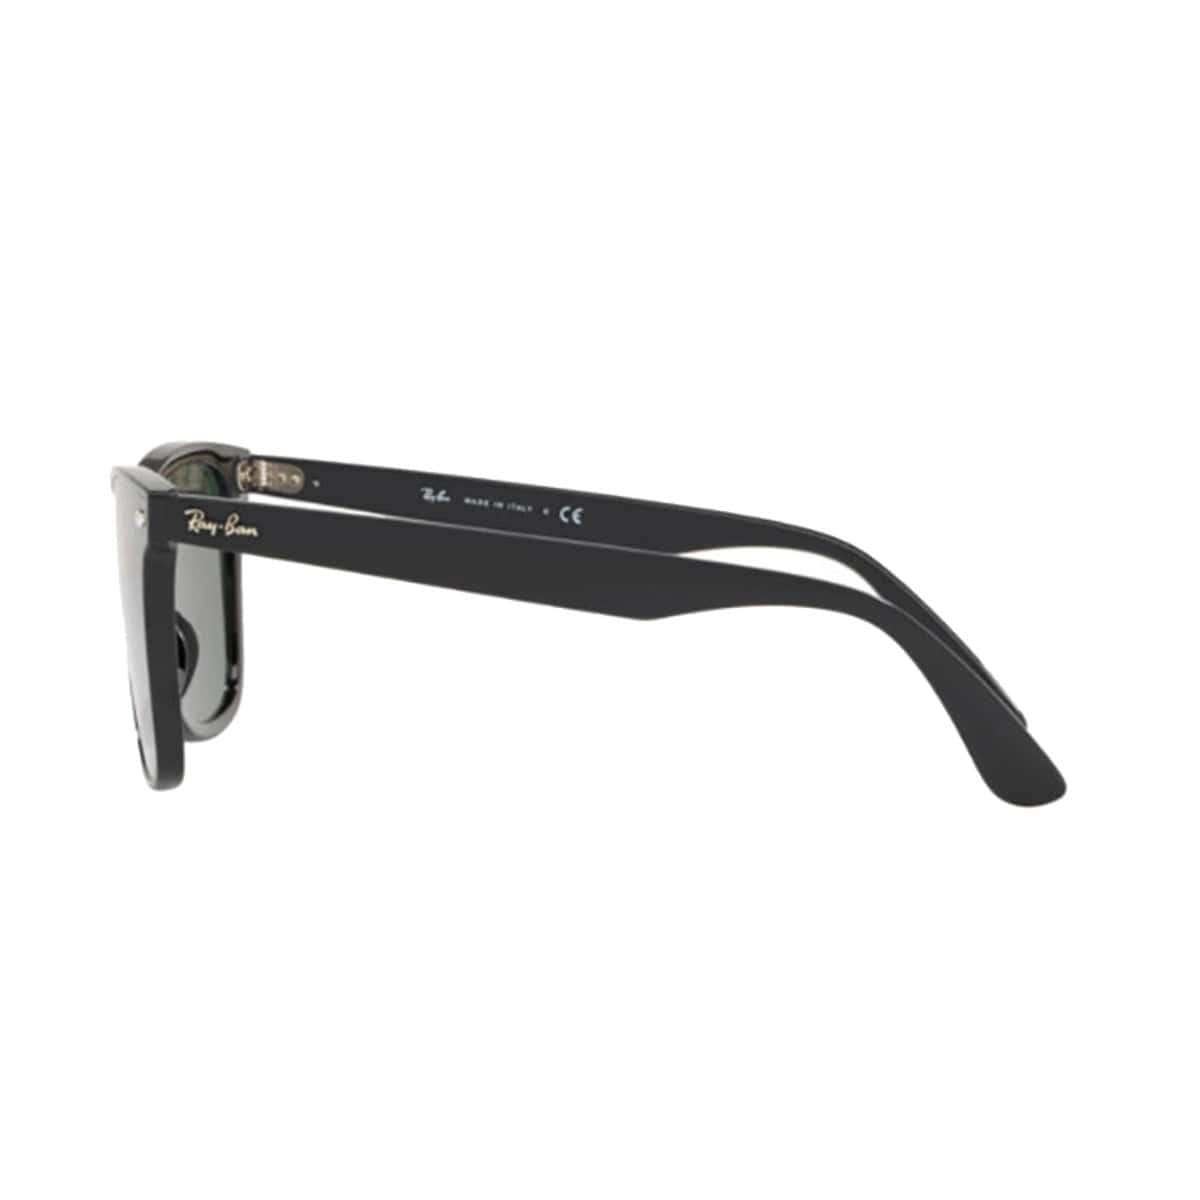 Ray-Ban RB4440NF-601S71 Blaze Wayfarer Matte Black Square Green Classic Lens Sunglasses 8053672950083